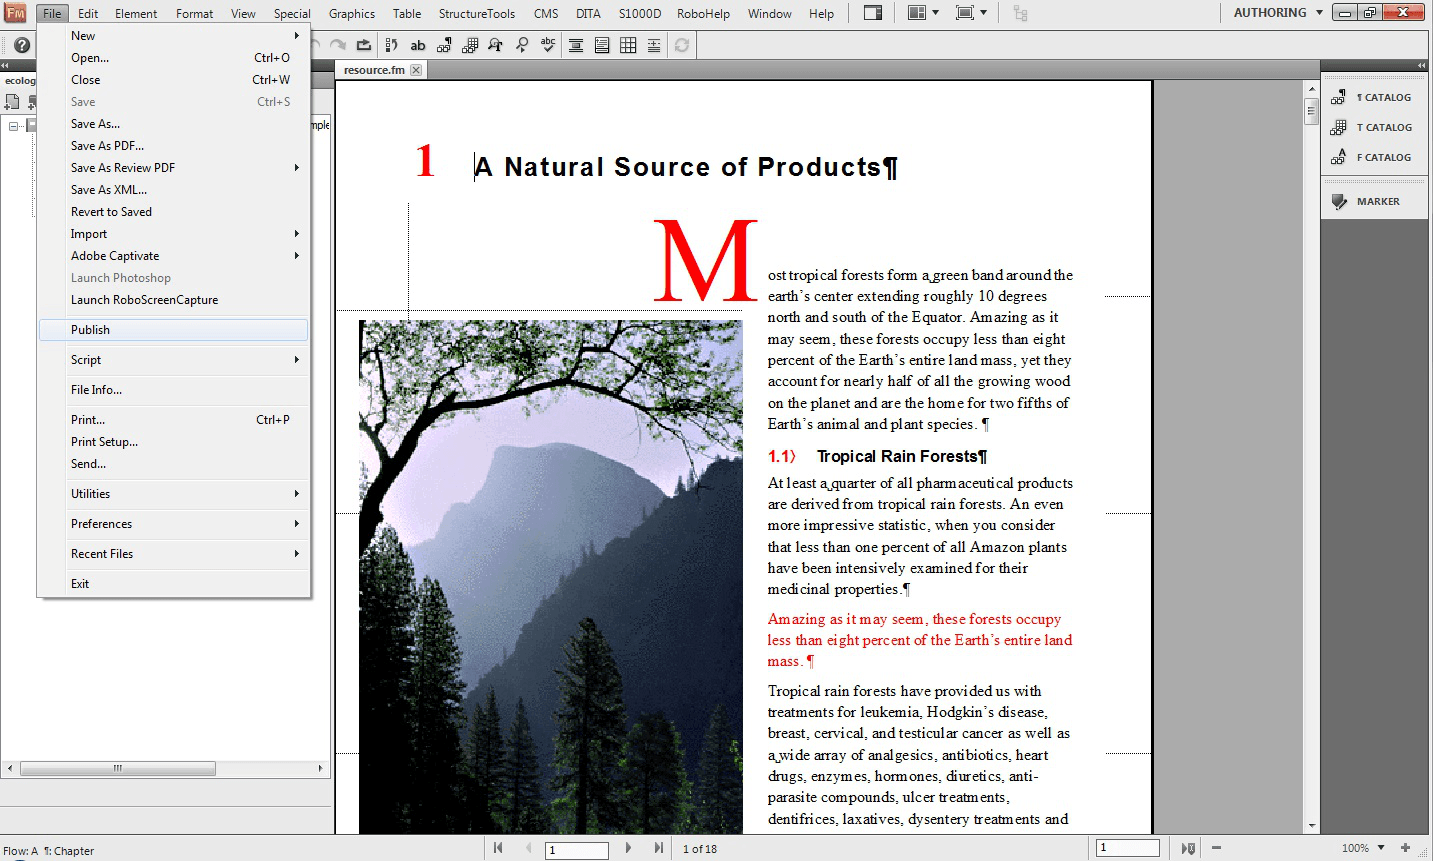 Adobe FrameMaker: Examples of Desktop Publishing Software by devabit